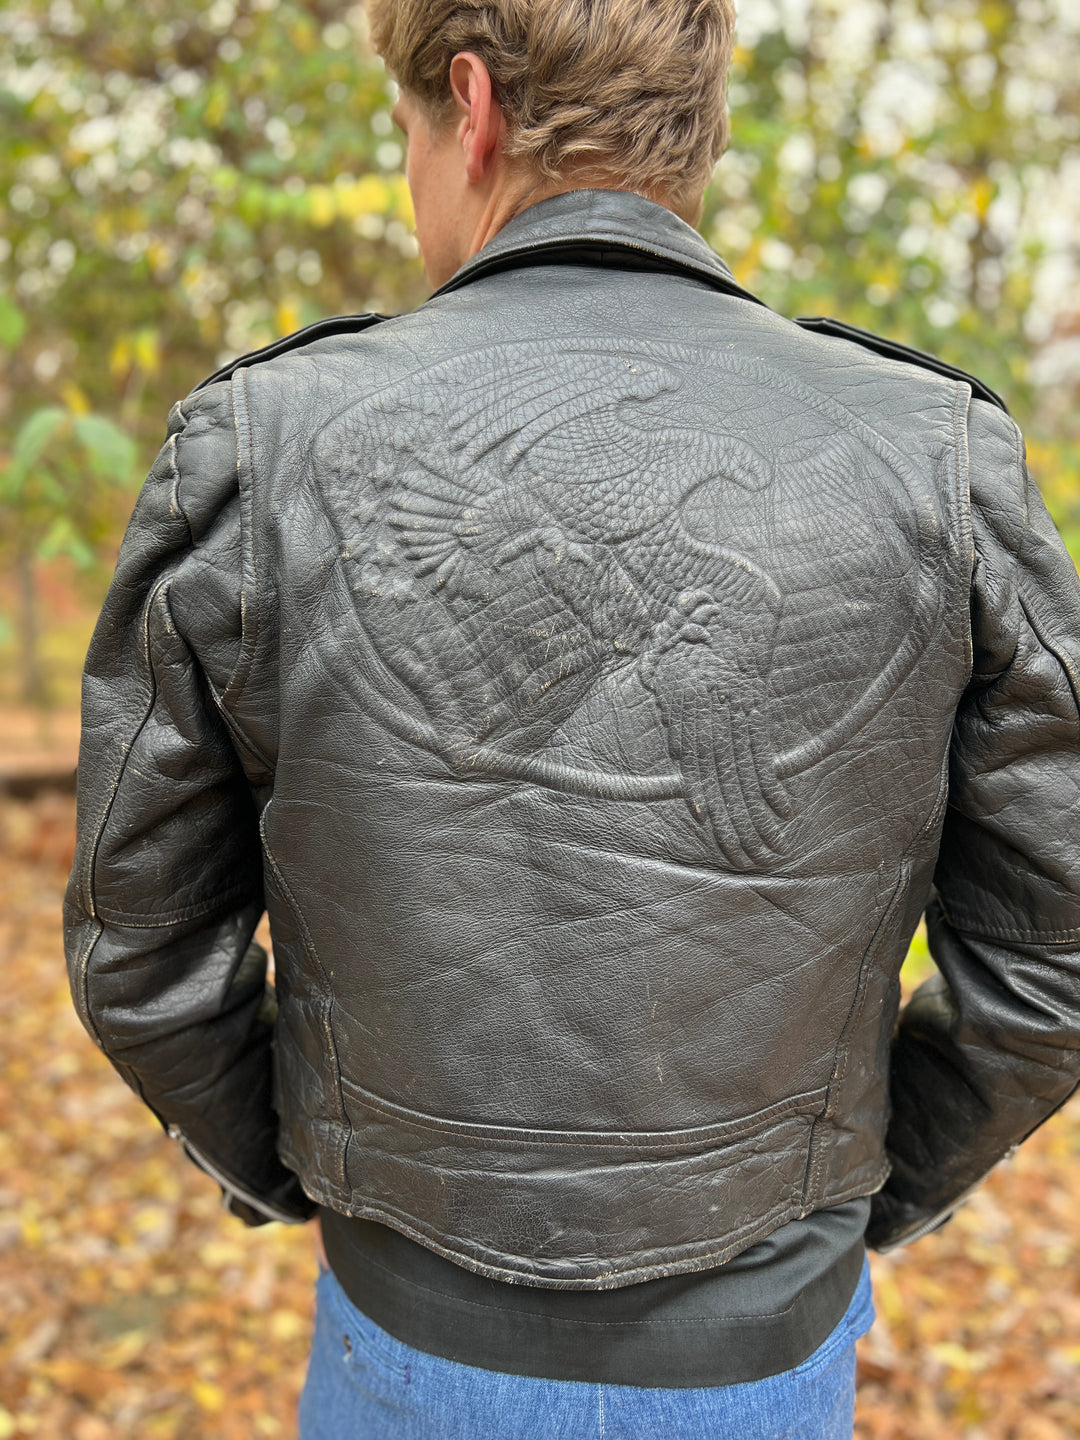 Vintage Black Leather Motorcycle Jacket, Eagle on Back, Wilsons